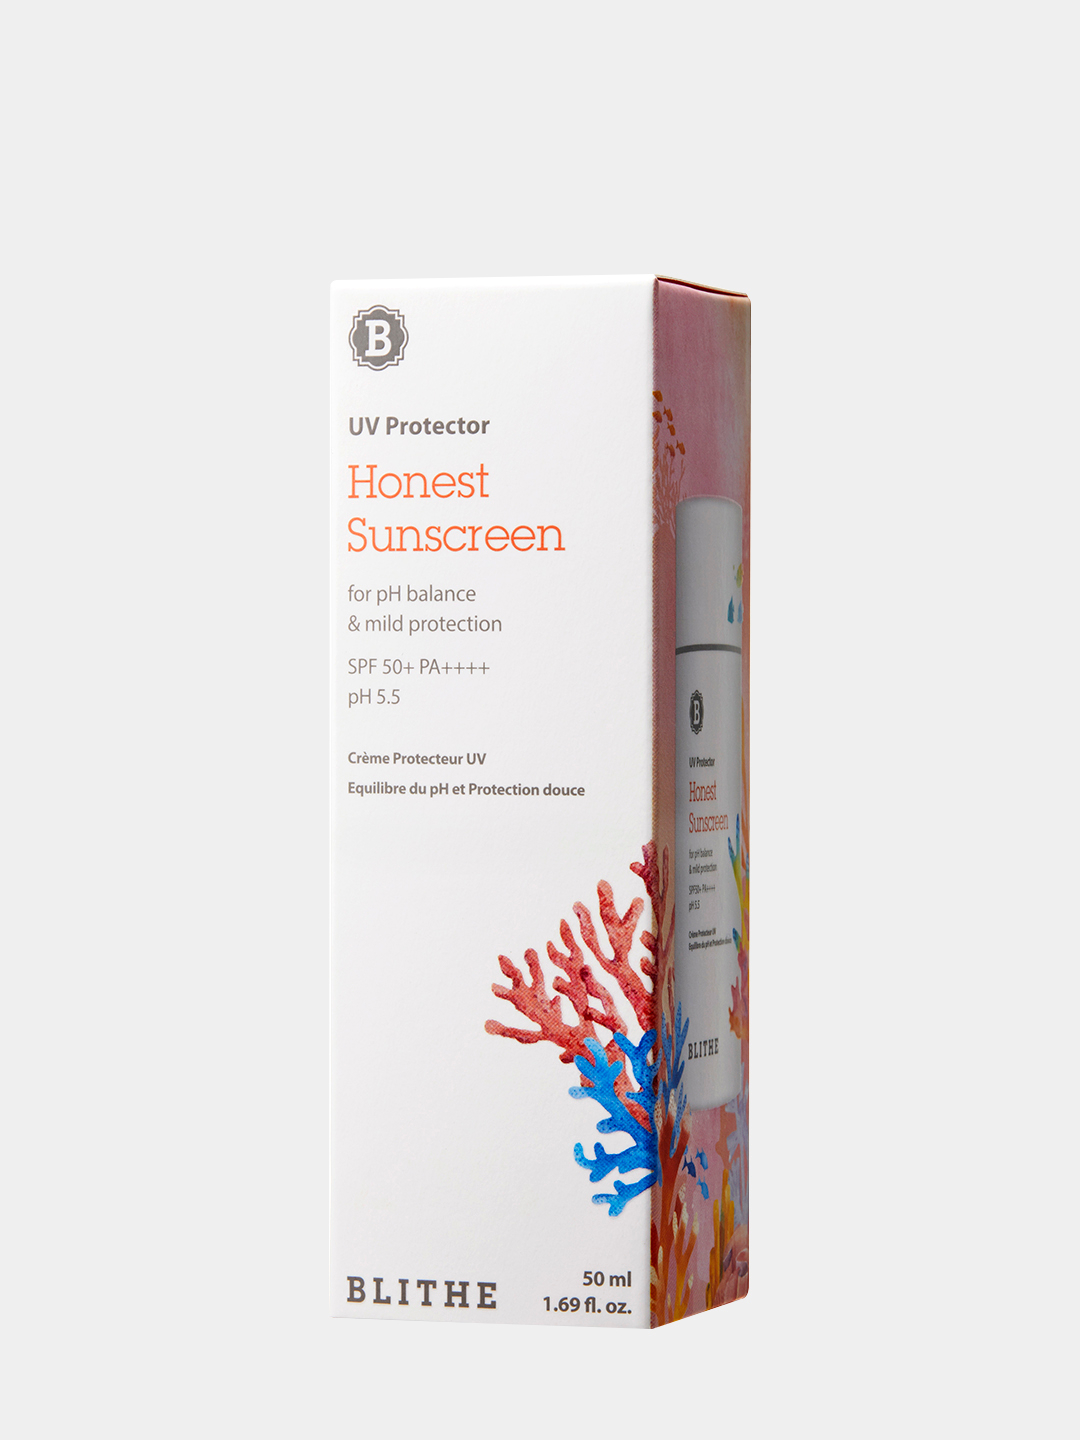 Blithe honest sunscreen. Blithe крем солнцезащитный - honest Sunscreen, 50мл. Солнцезащитный крем Blithe honest Sunscreen SPF 50+. СПФ крем Blithe - honest Sunscreen spf50+. Blithe UV Protector honest Sunscreen (50мл).